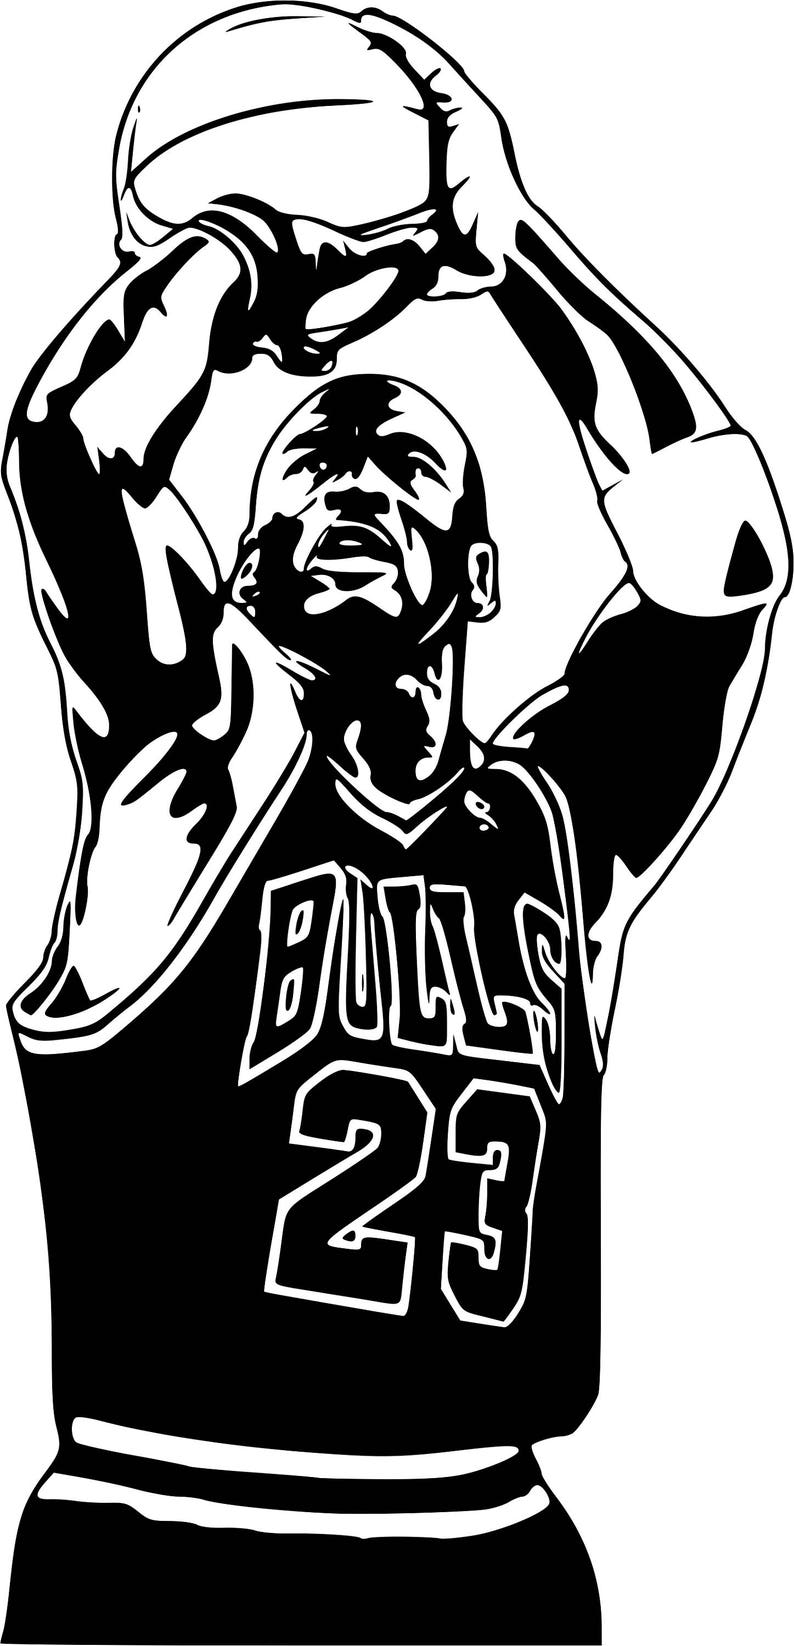 Michael Jordan 23 Bulls NBA Wall Art Decal Basketball Sport | Etsy